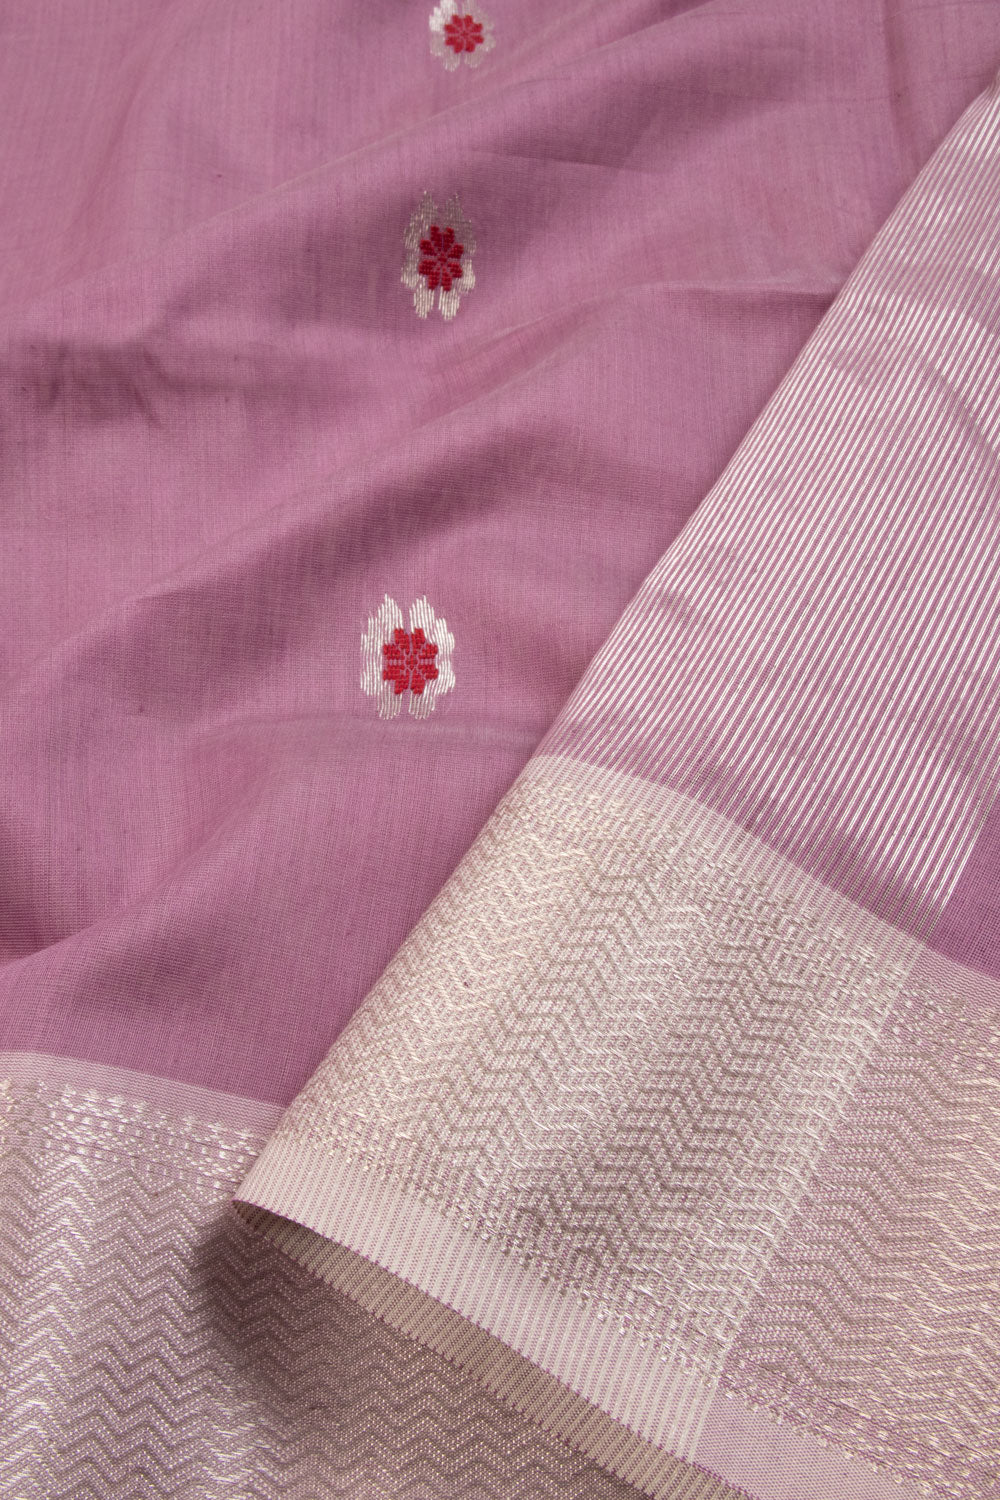 Lavendor Handloom Maheshwari Silk Cotton Saree 10068641 - Avishya